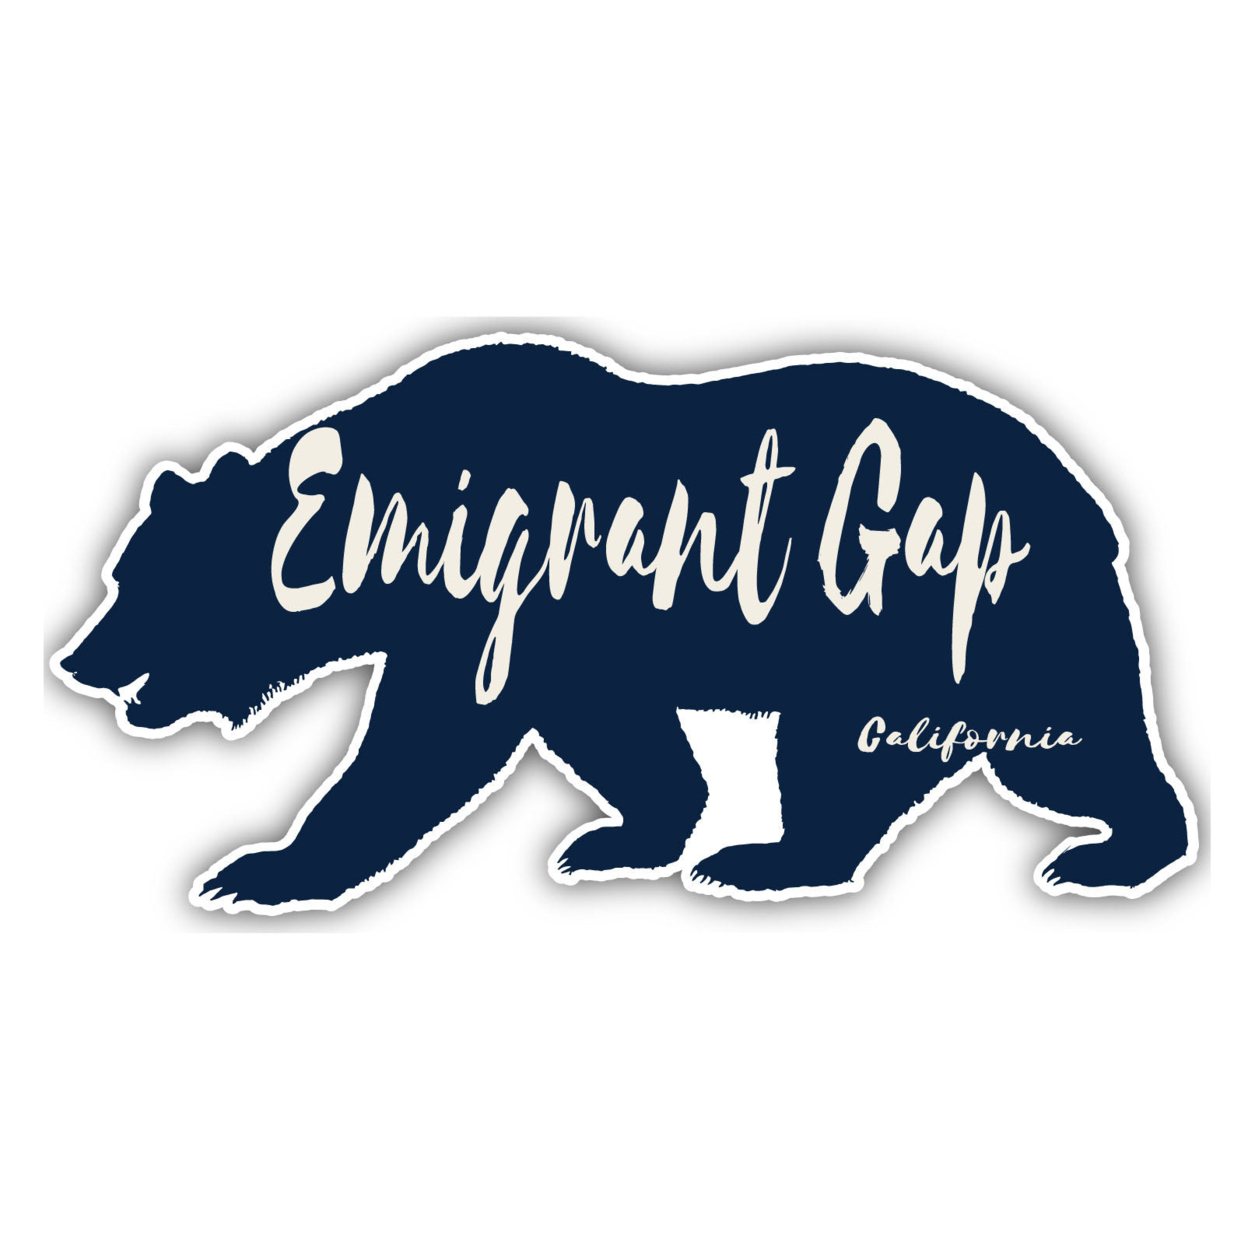 Emigrant Gap California Souvenir Decorative Stickers (Choose Theme And Size) - 4-Pack, 2-Inch, Bear